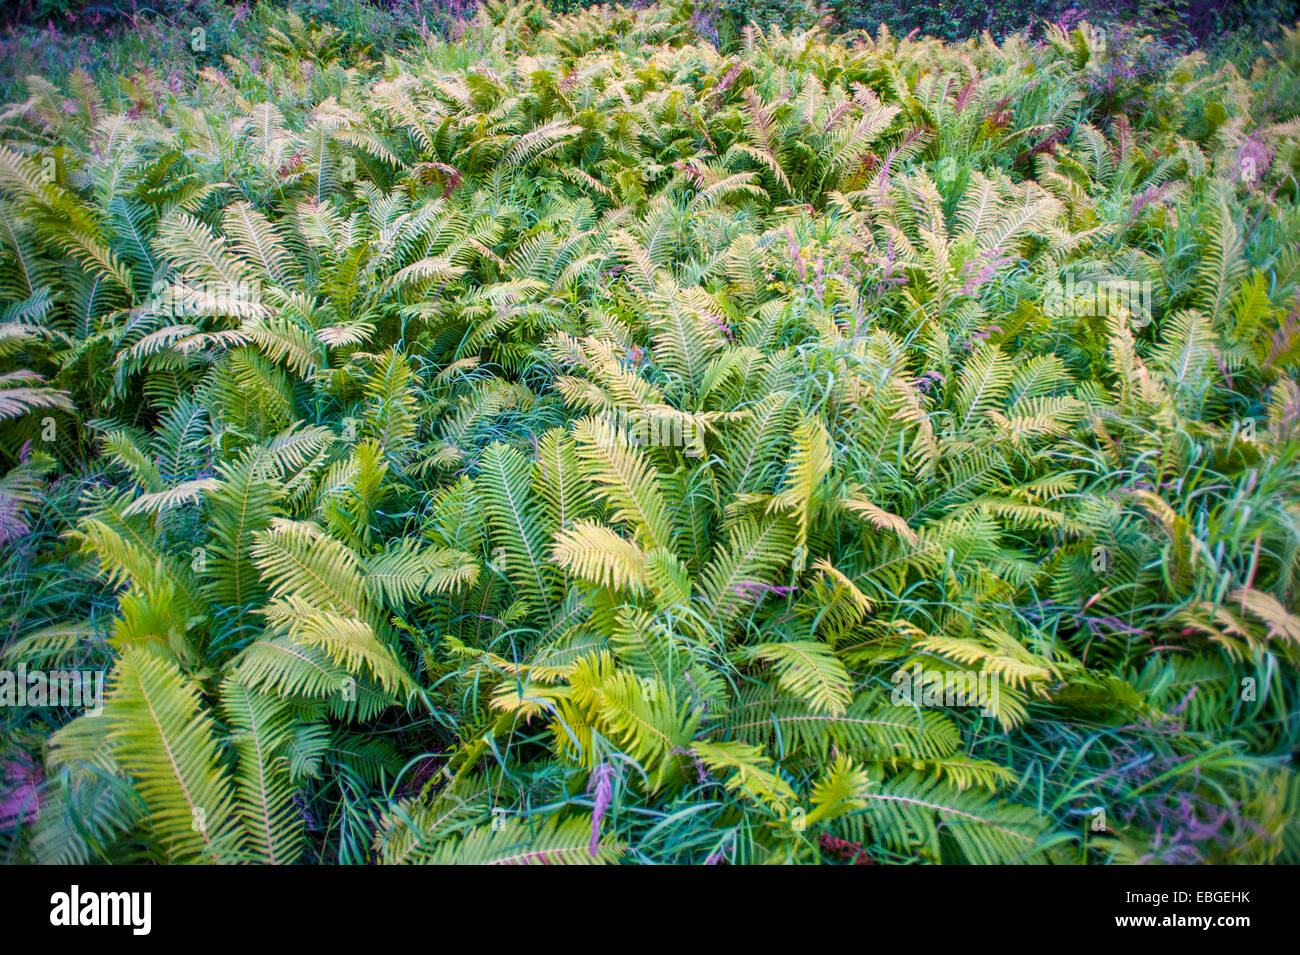 Ferns (Pteridophyta) growing in an Alaskan forest Stock Photo